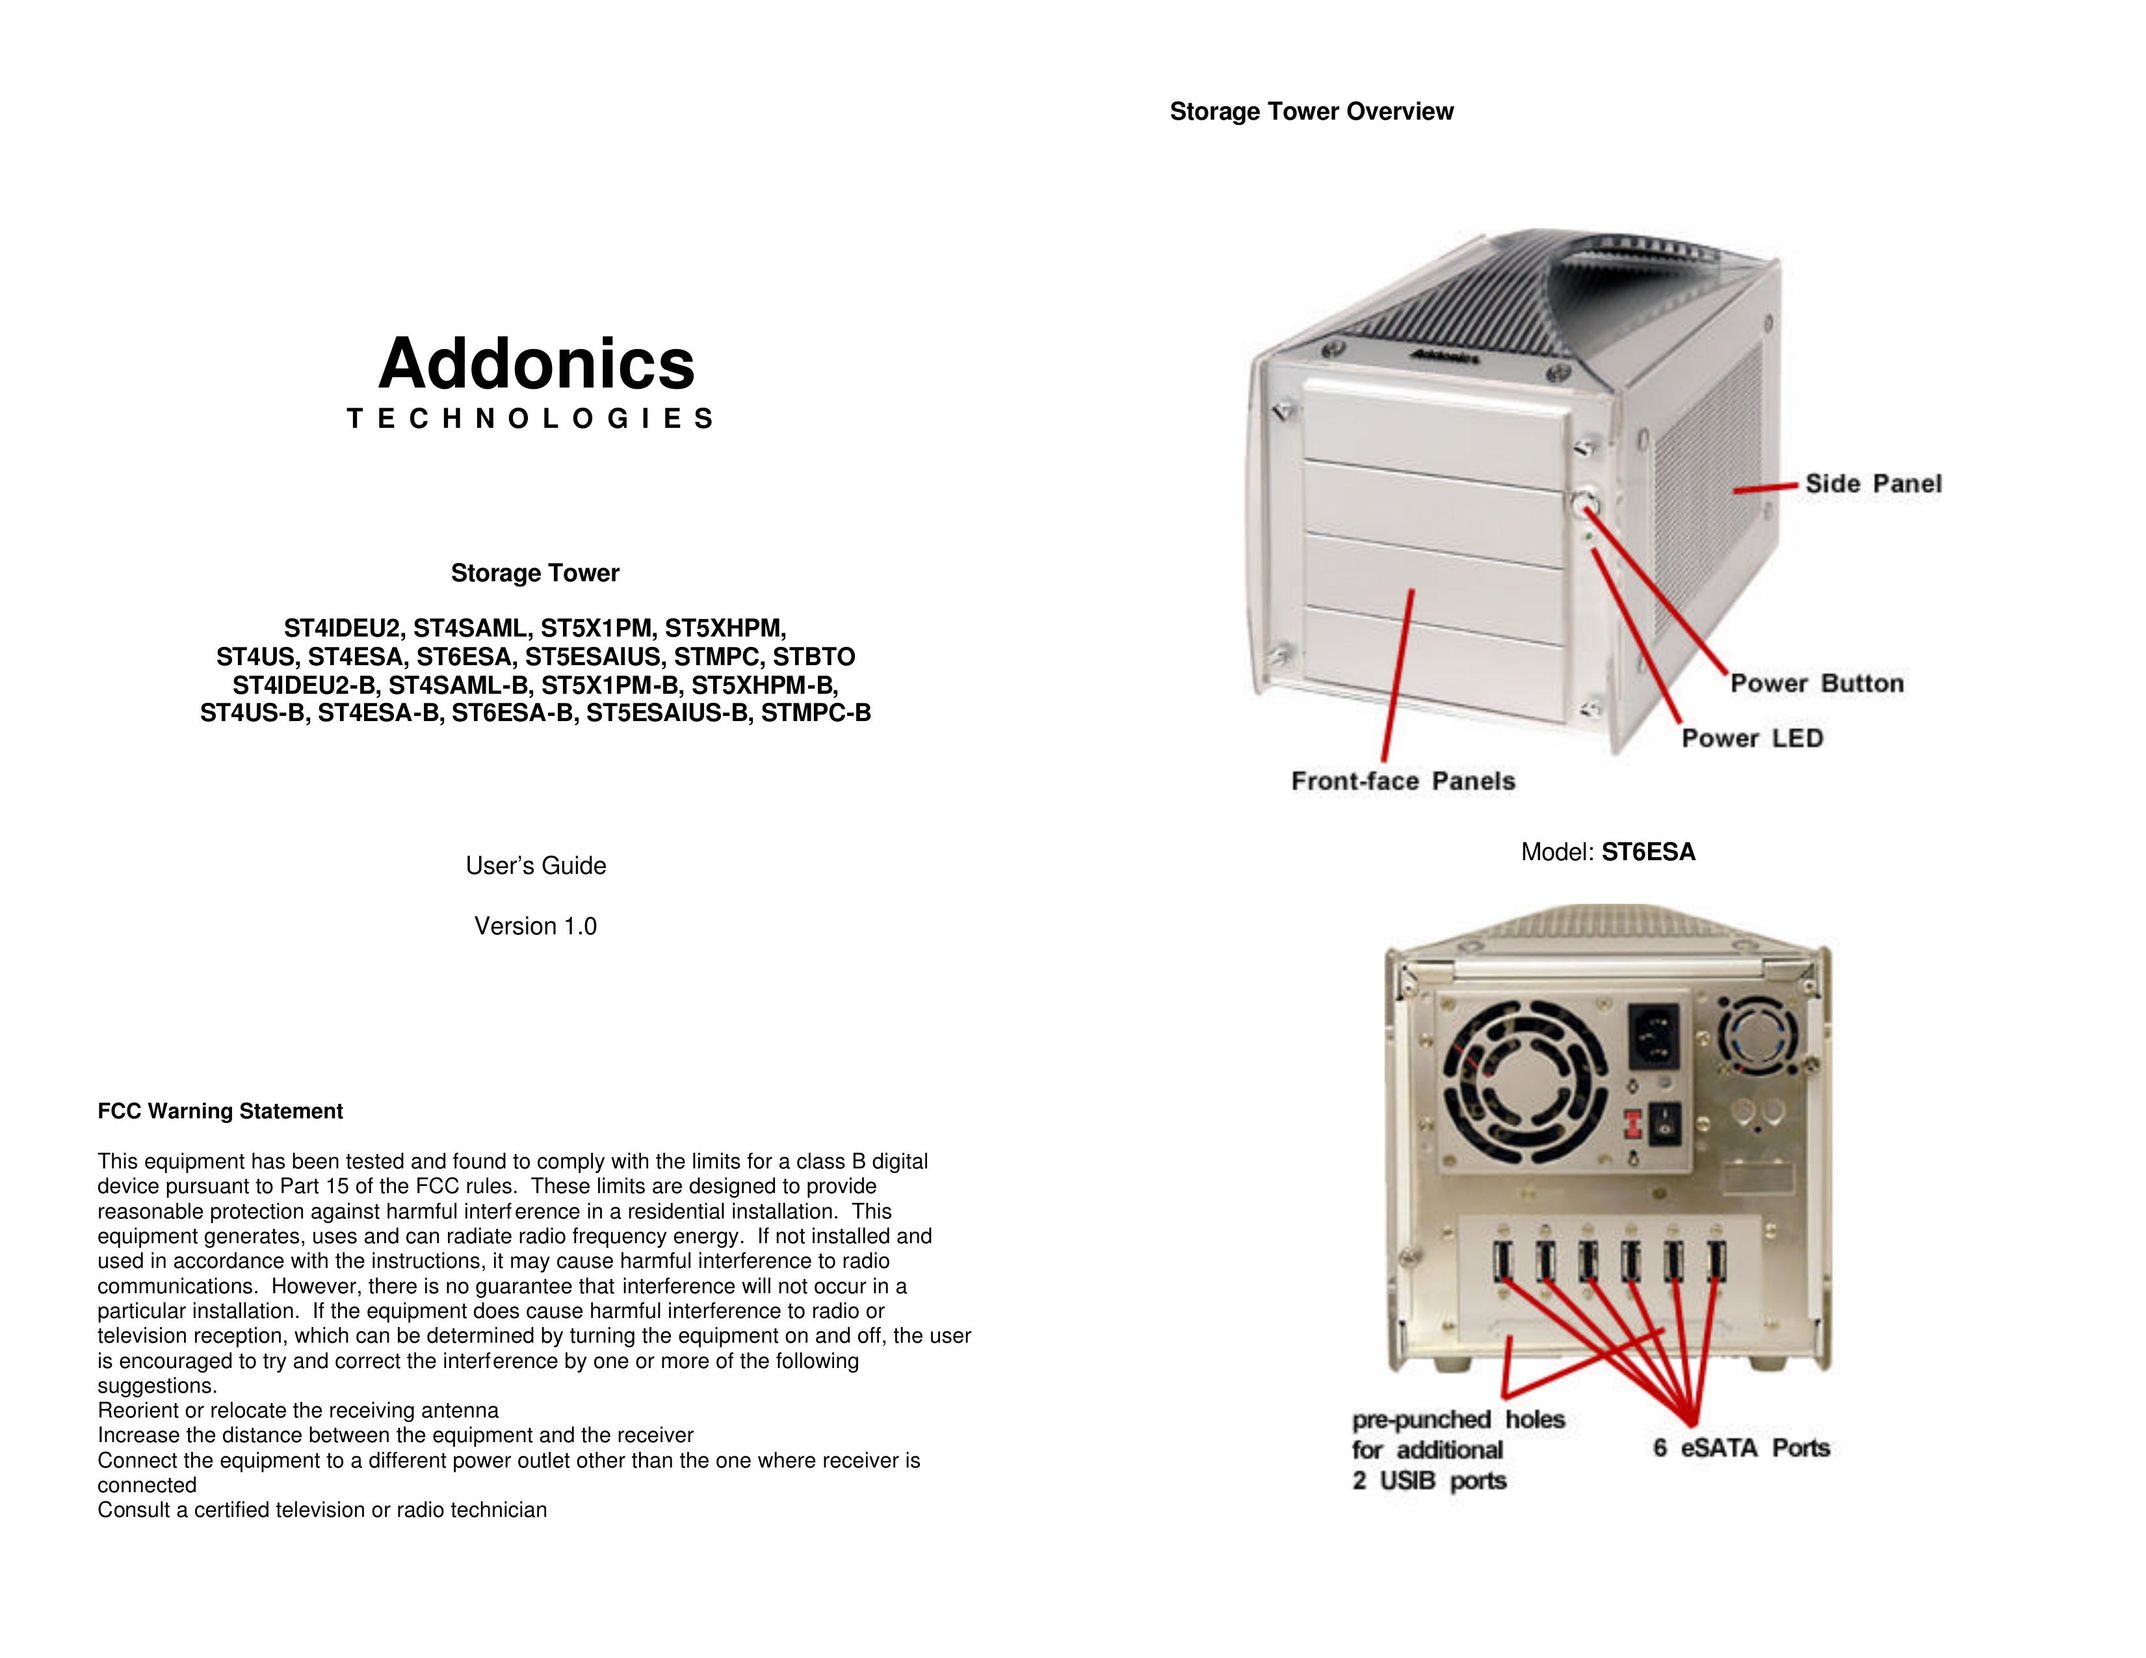 Addonics Technologies ST4ESA Portable Media Storage User Manual